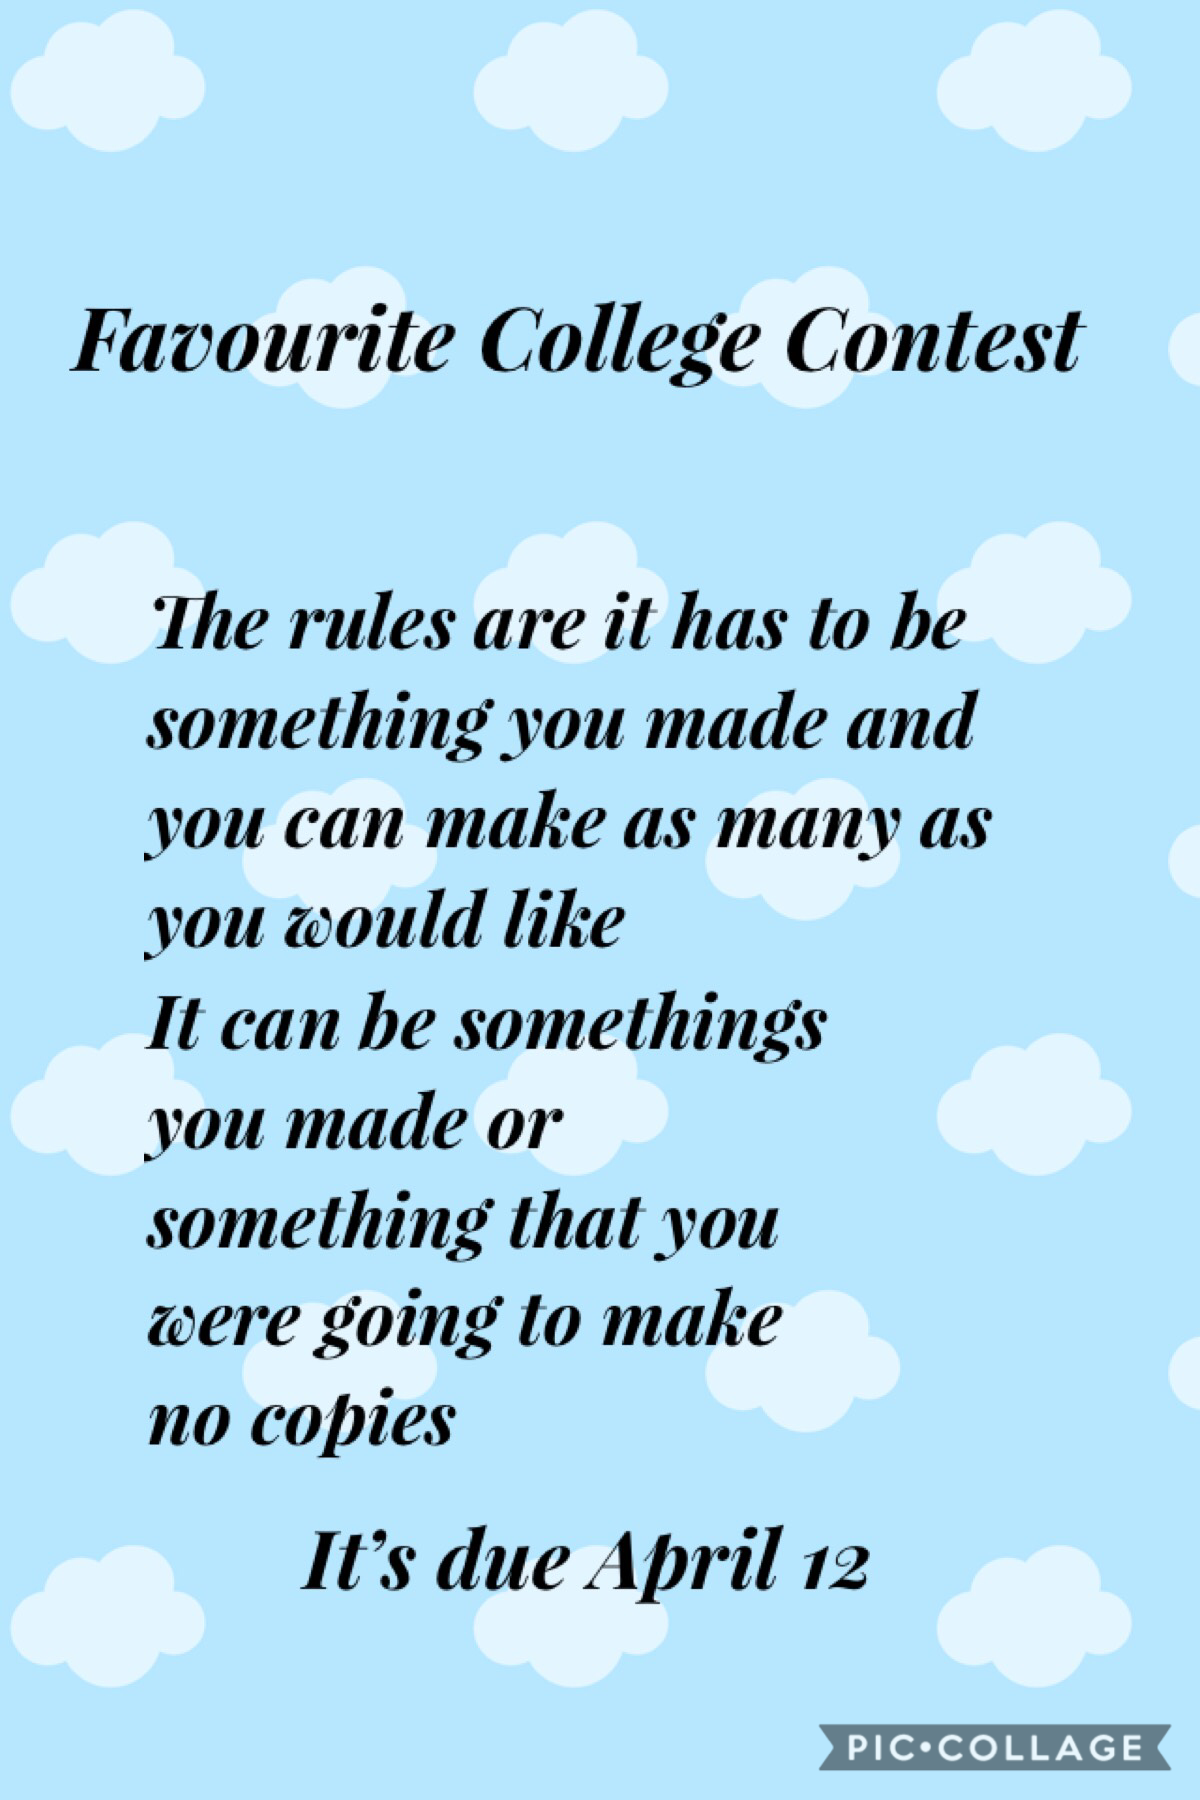 Favourite college challenge